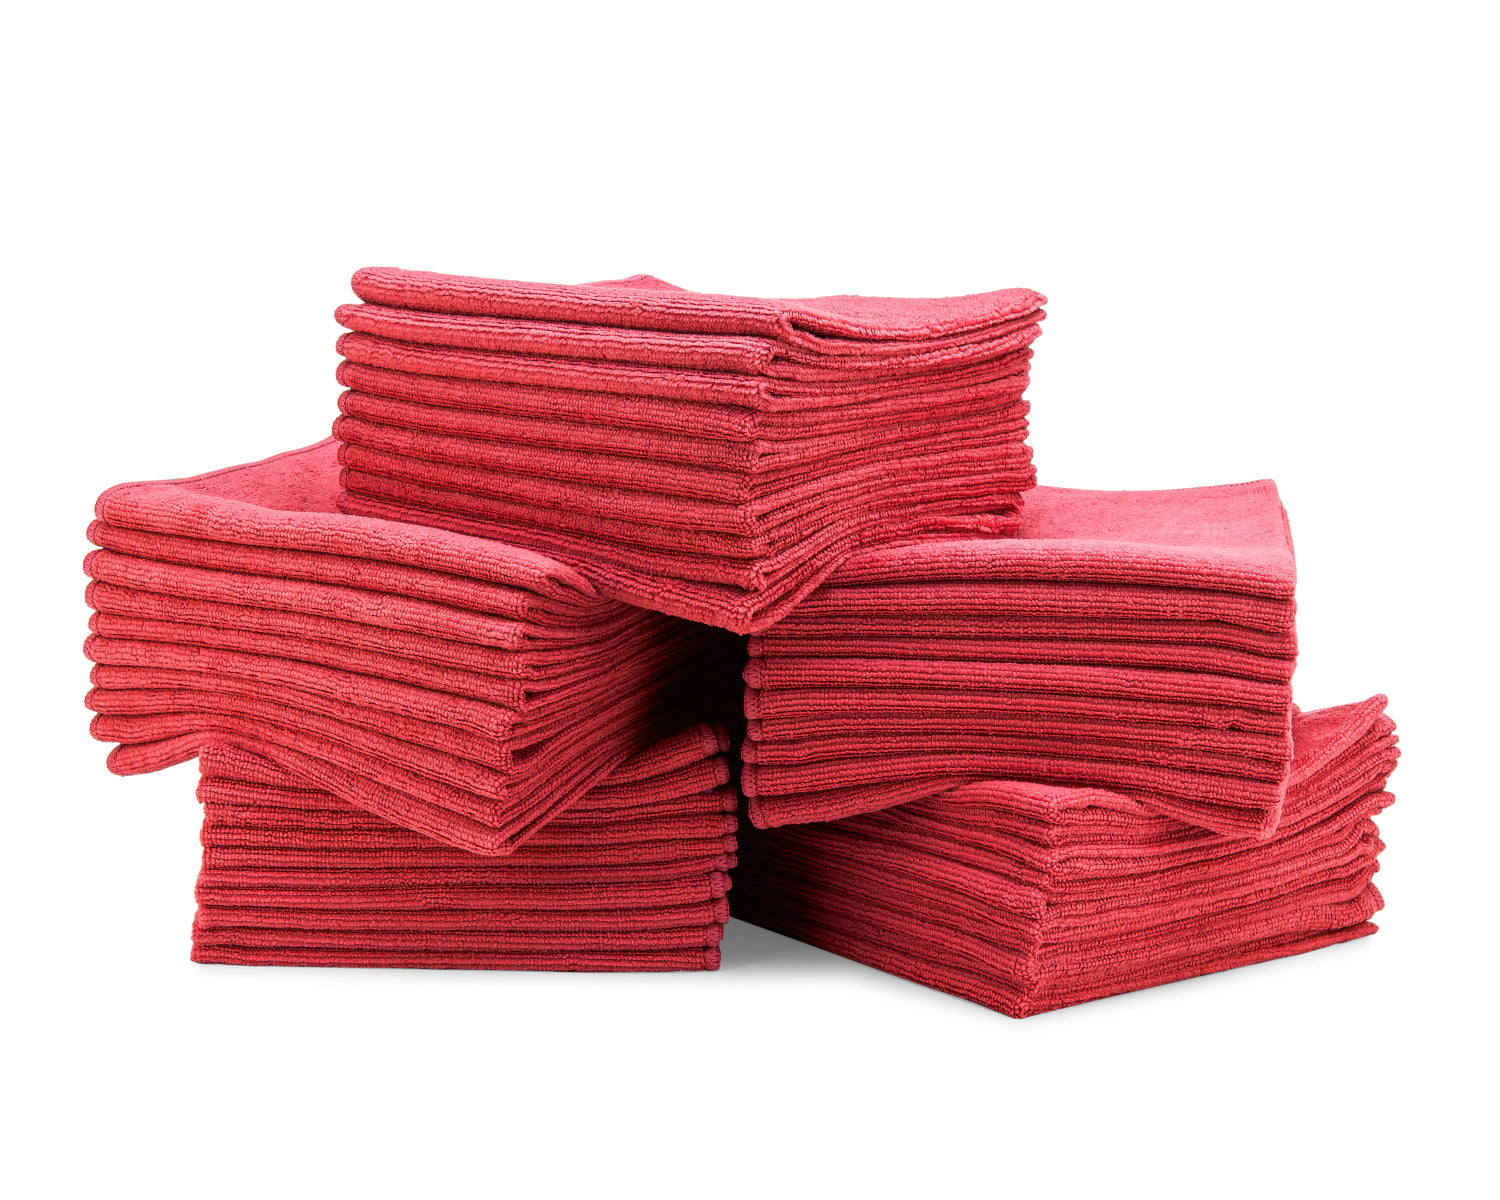 Microfiber Towel 40x90cm Micro Fibre Cloth Car Cleaning Towels Wash Cloth  Product Microfiber Car Auto Clean Wash Polish Towel Cloth From Newclean,  $2.87